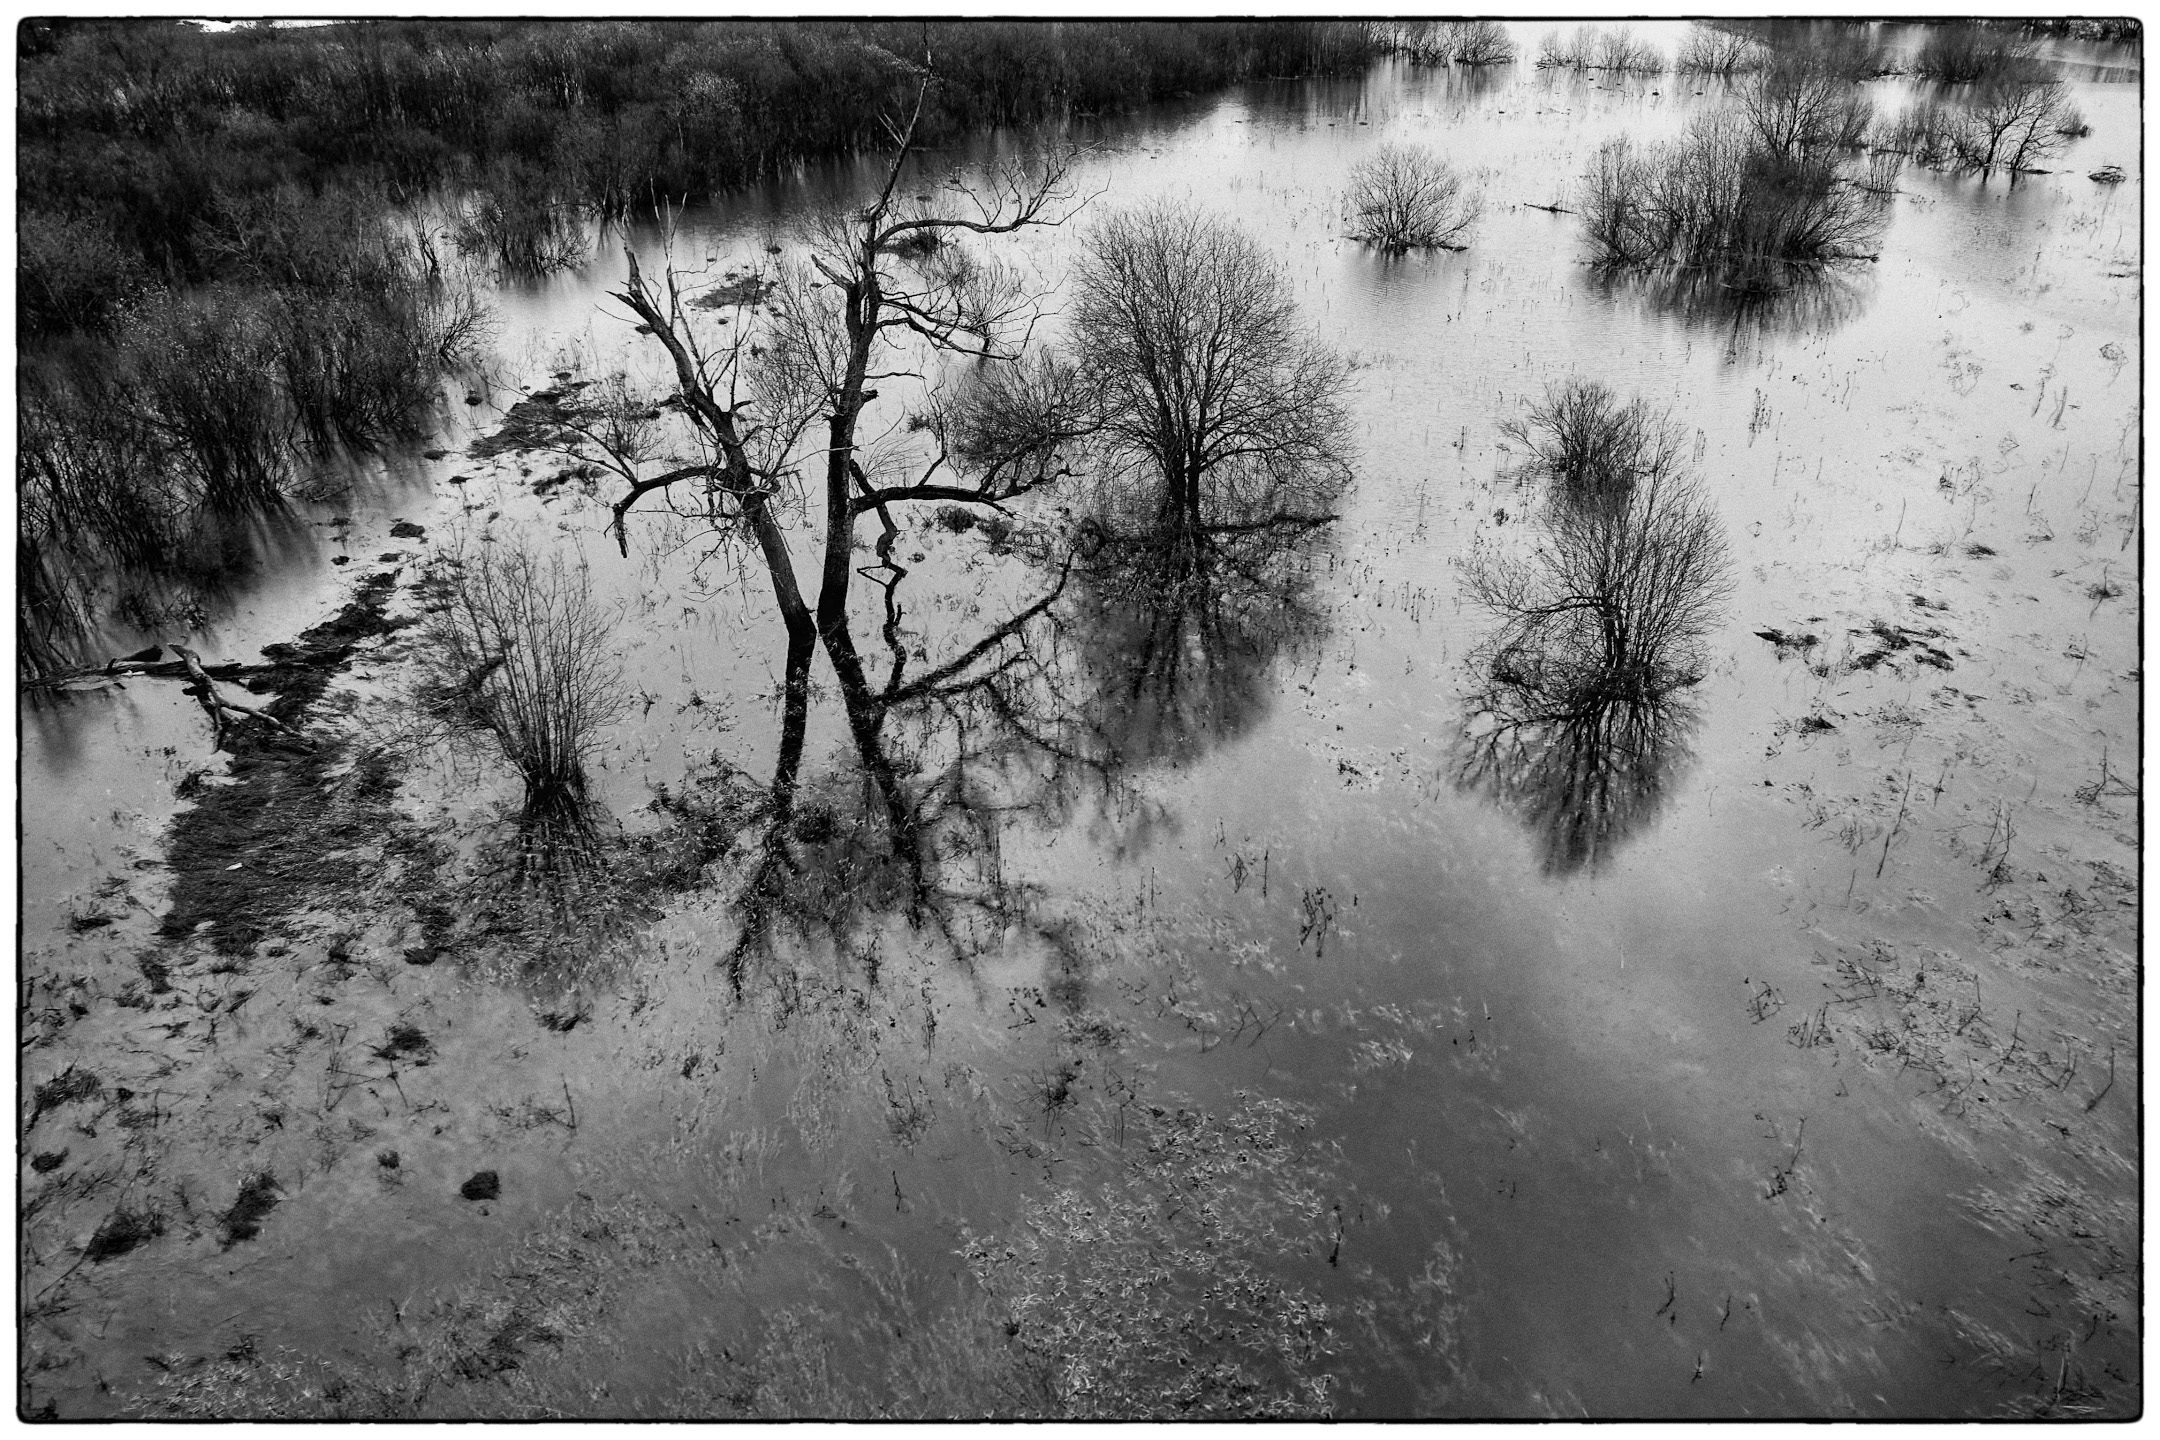 вода. река. весна. ч\\б деревья. пейзаж, Totoro D